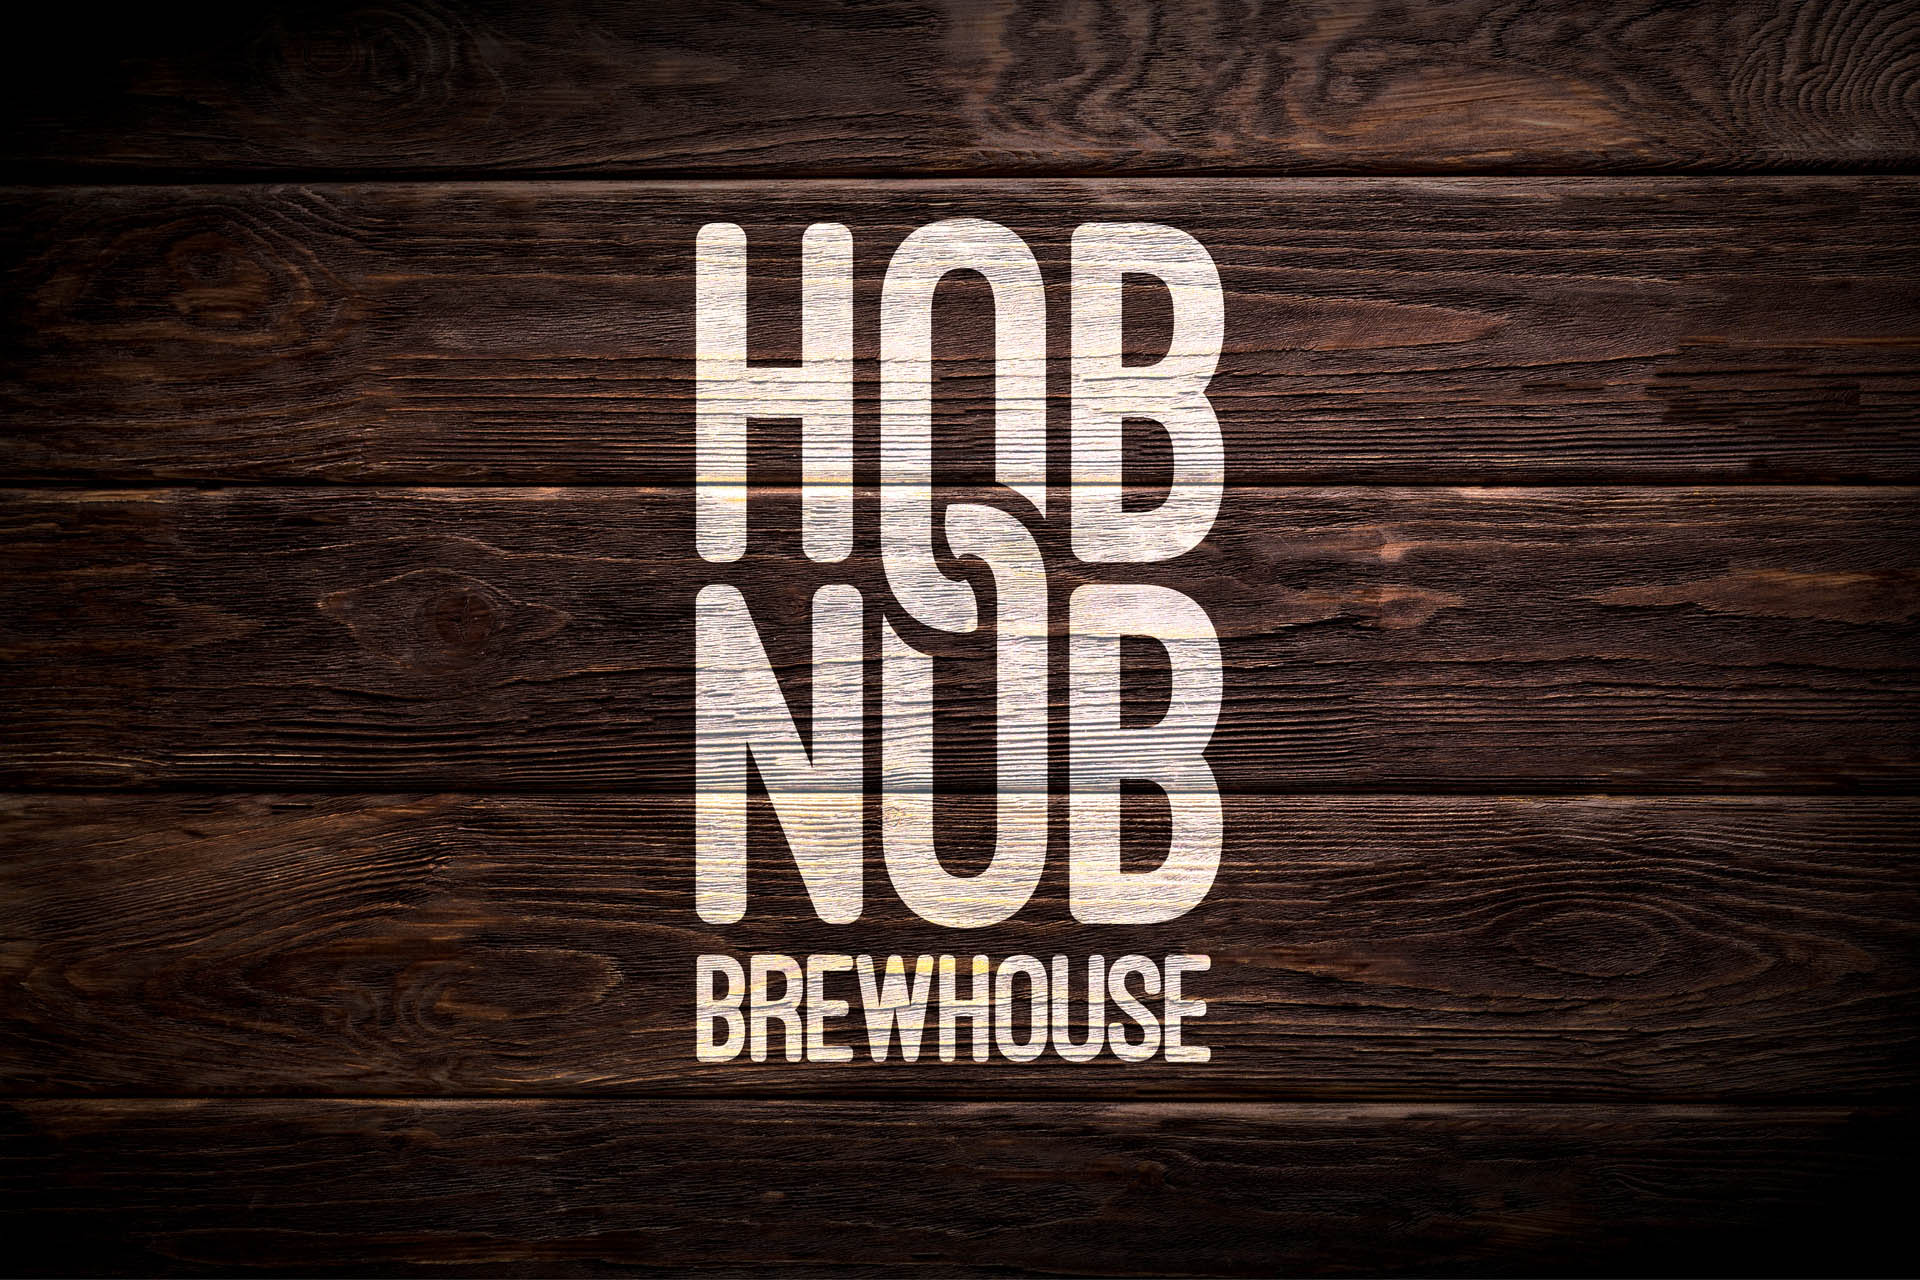 Hob Nob Cover Image